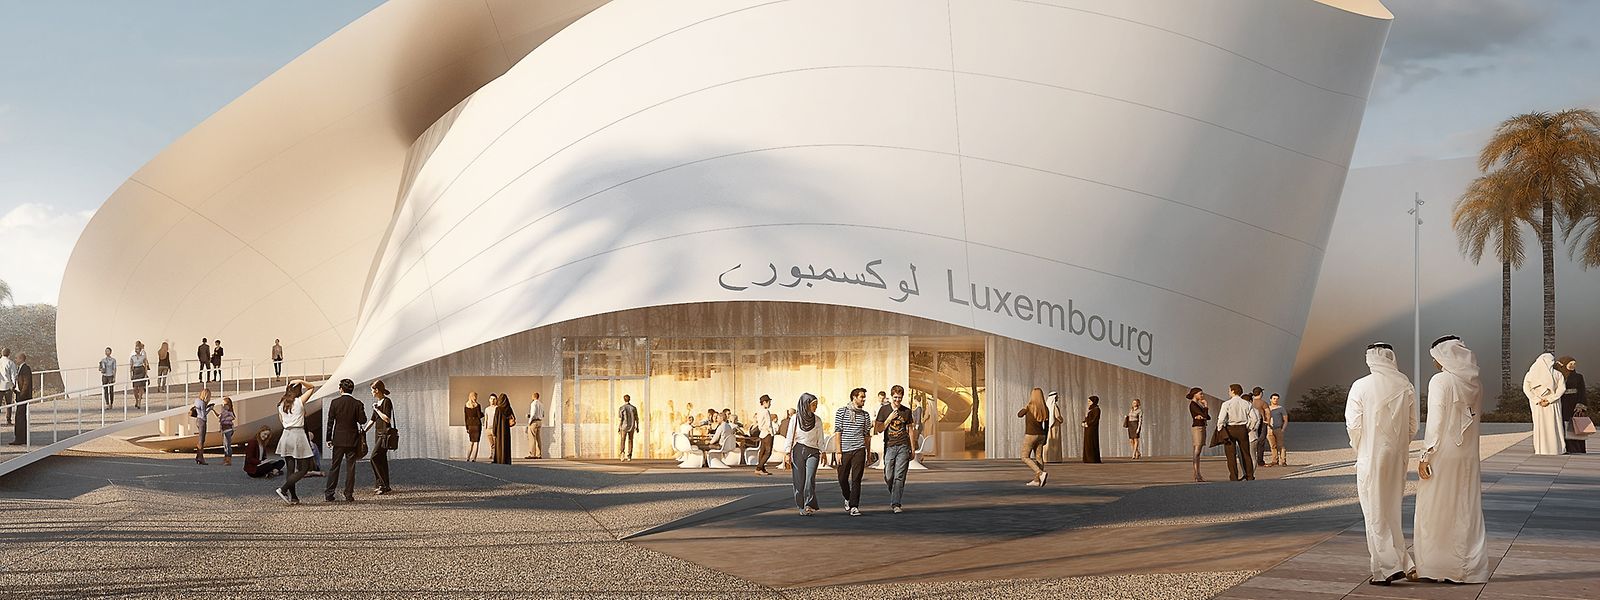 Der luxemburgische Pavillon in Dubai